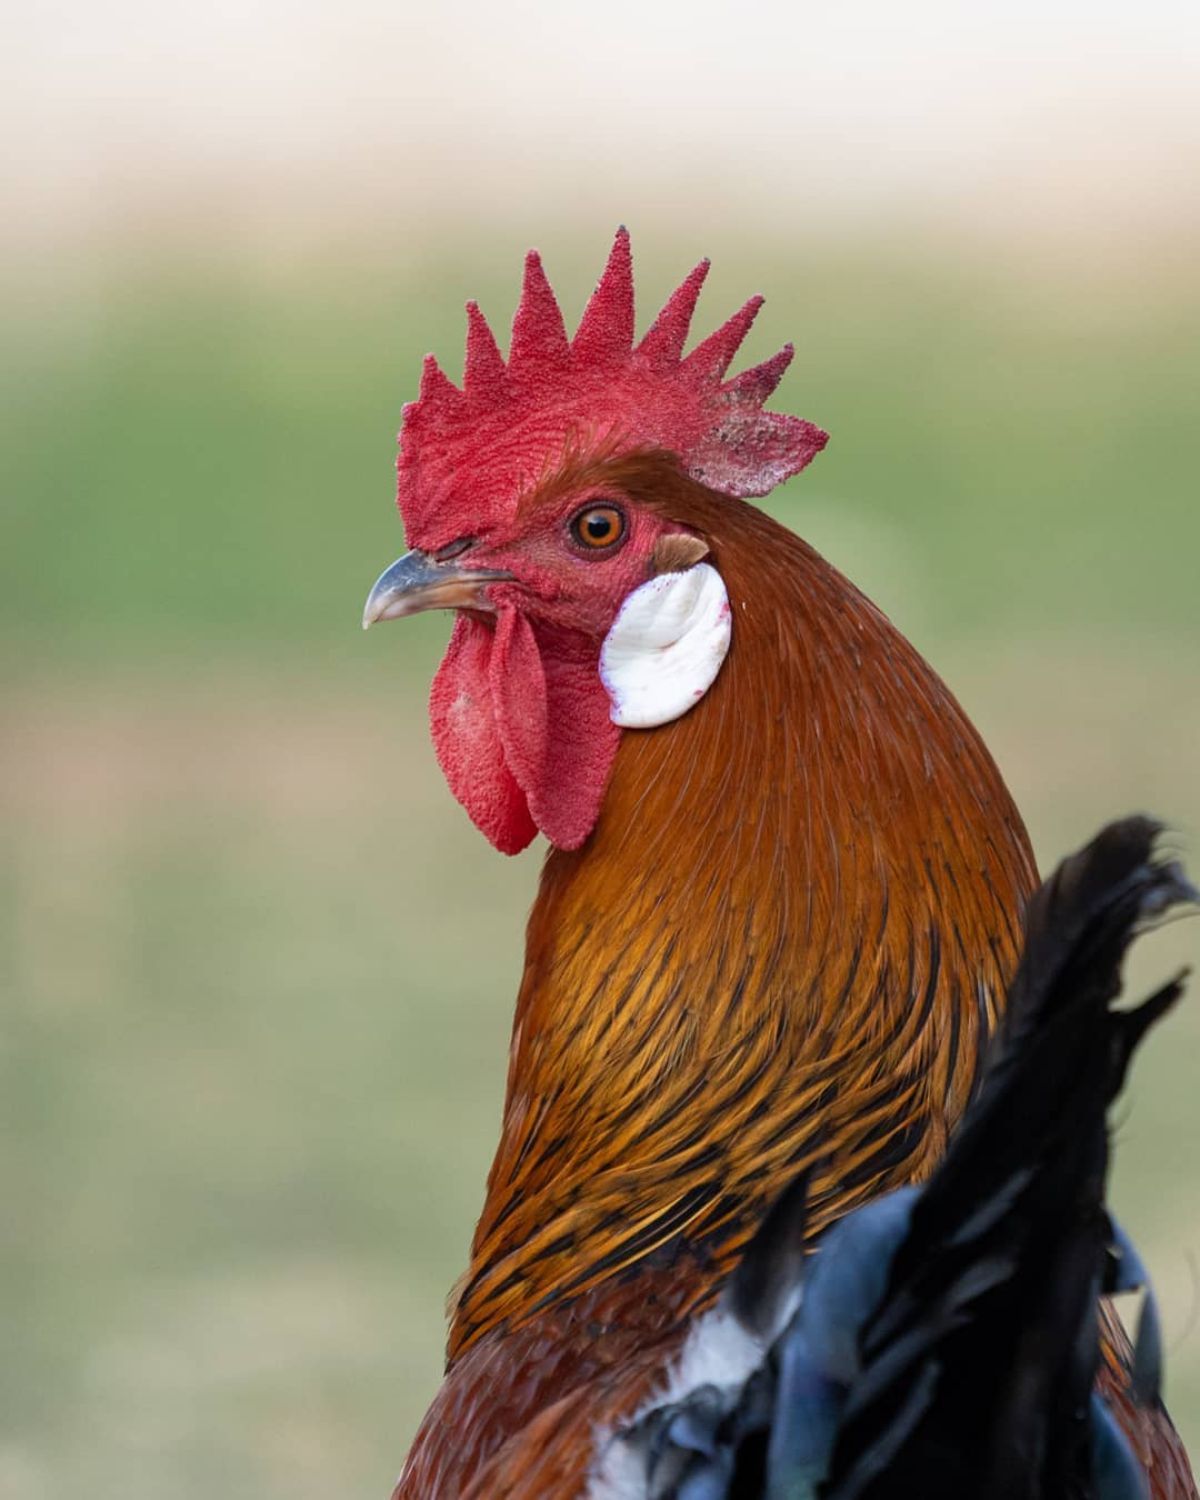 A close-up of a Utrerana rooster.